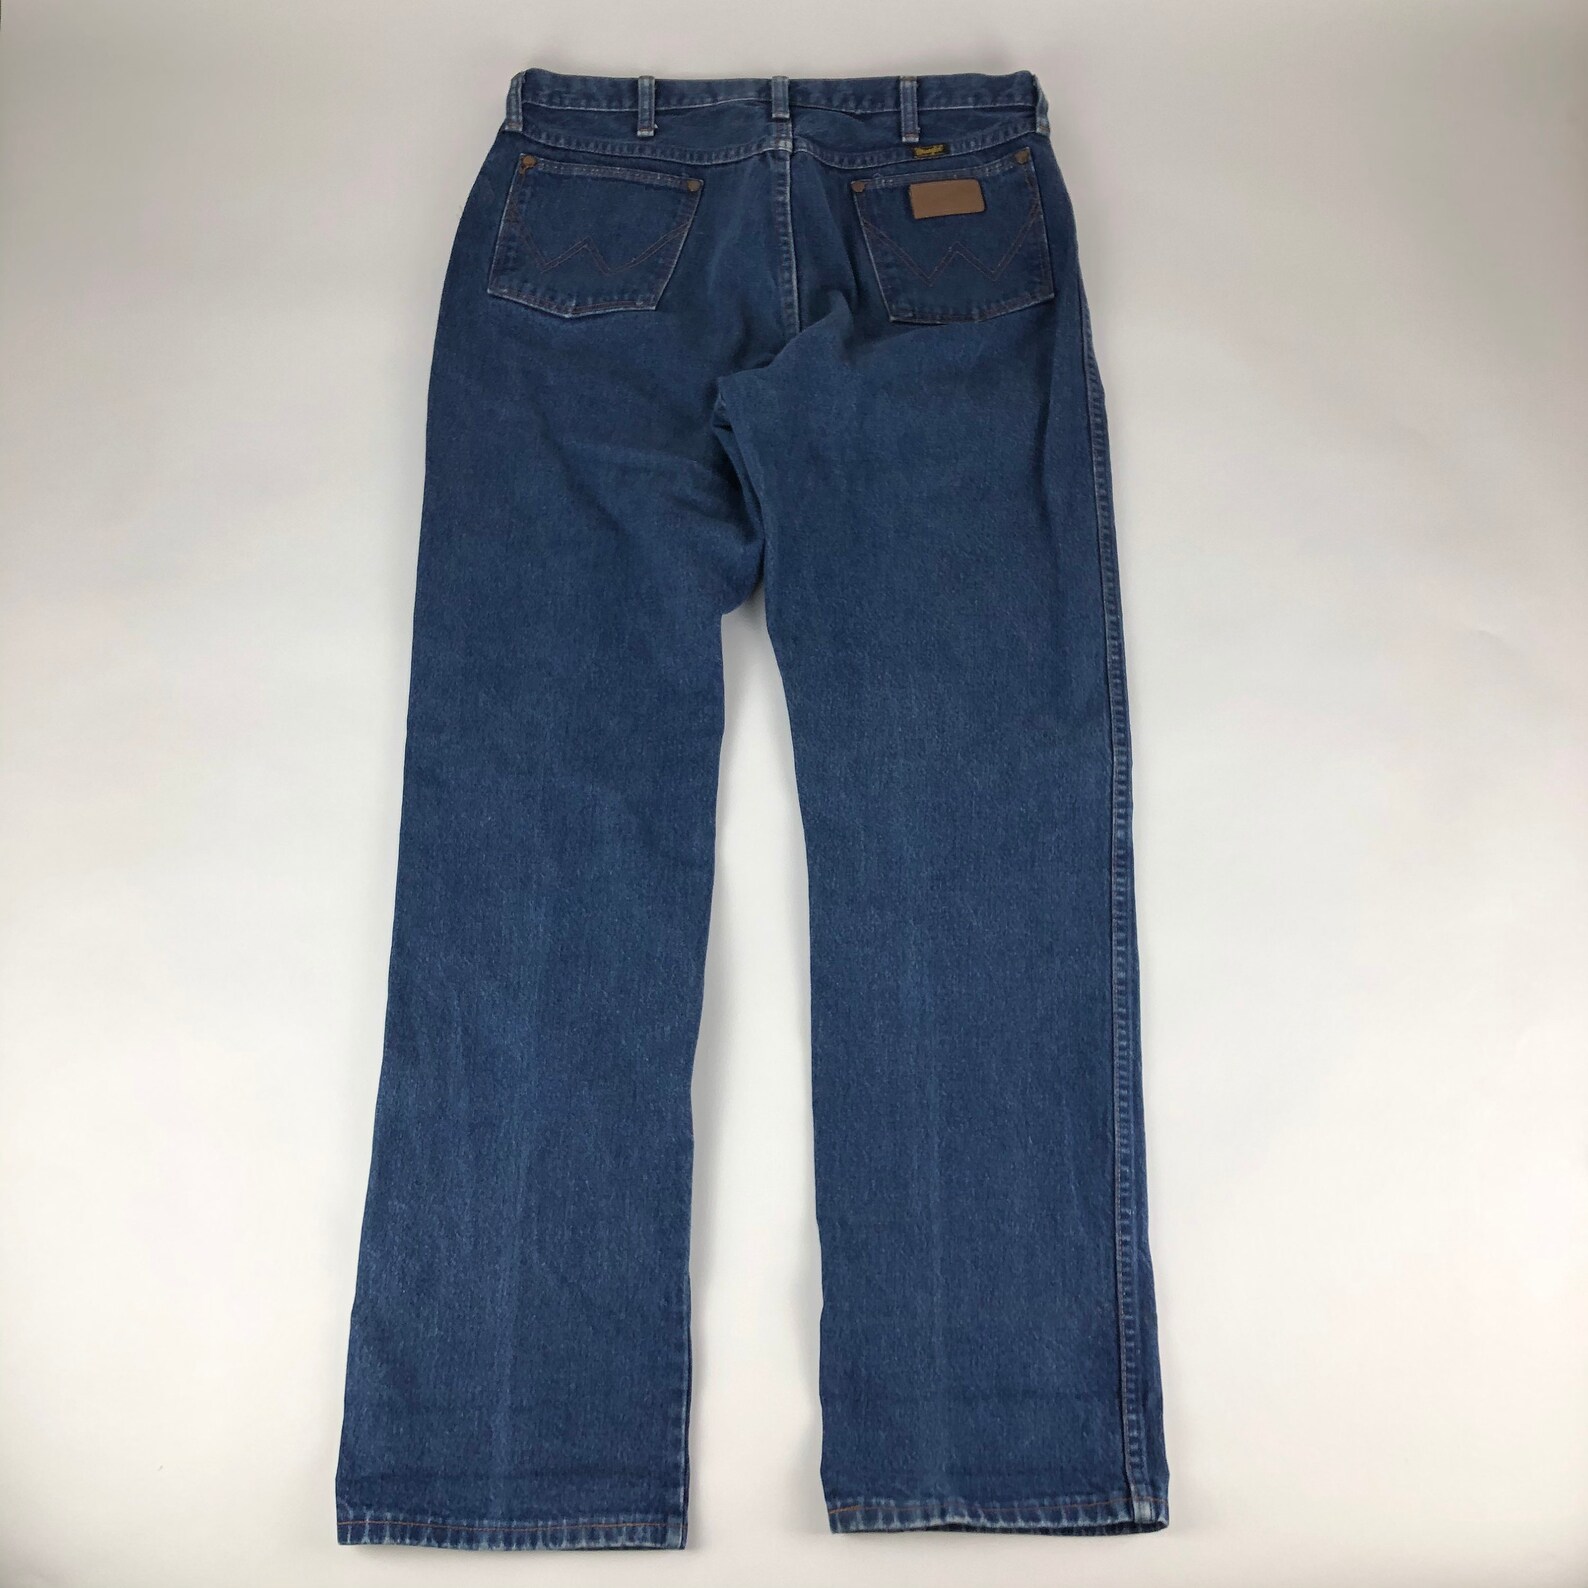 1980s/1990s Wrangler Jeans Made in USA 34x32.5 | Etsy